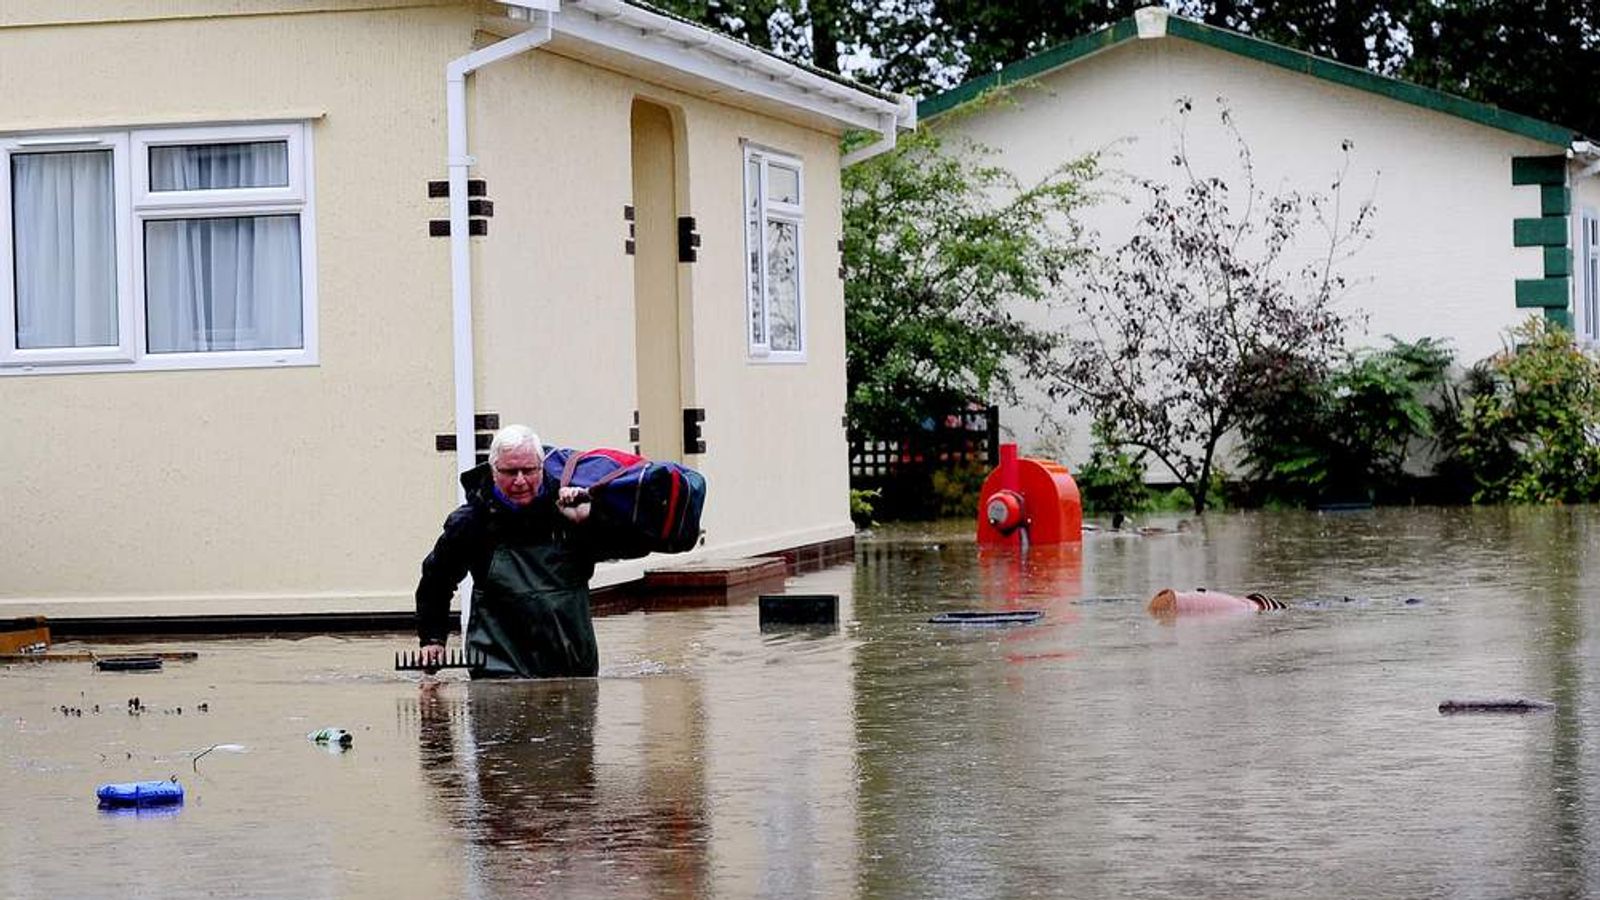 Uk Floods Homes Evacuated And Travel Disrupted Uk News Sky News 0395